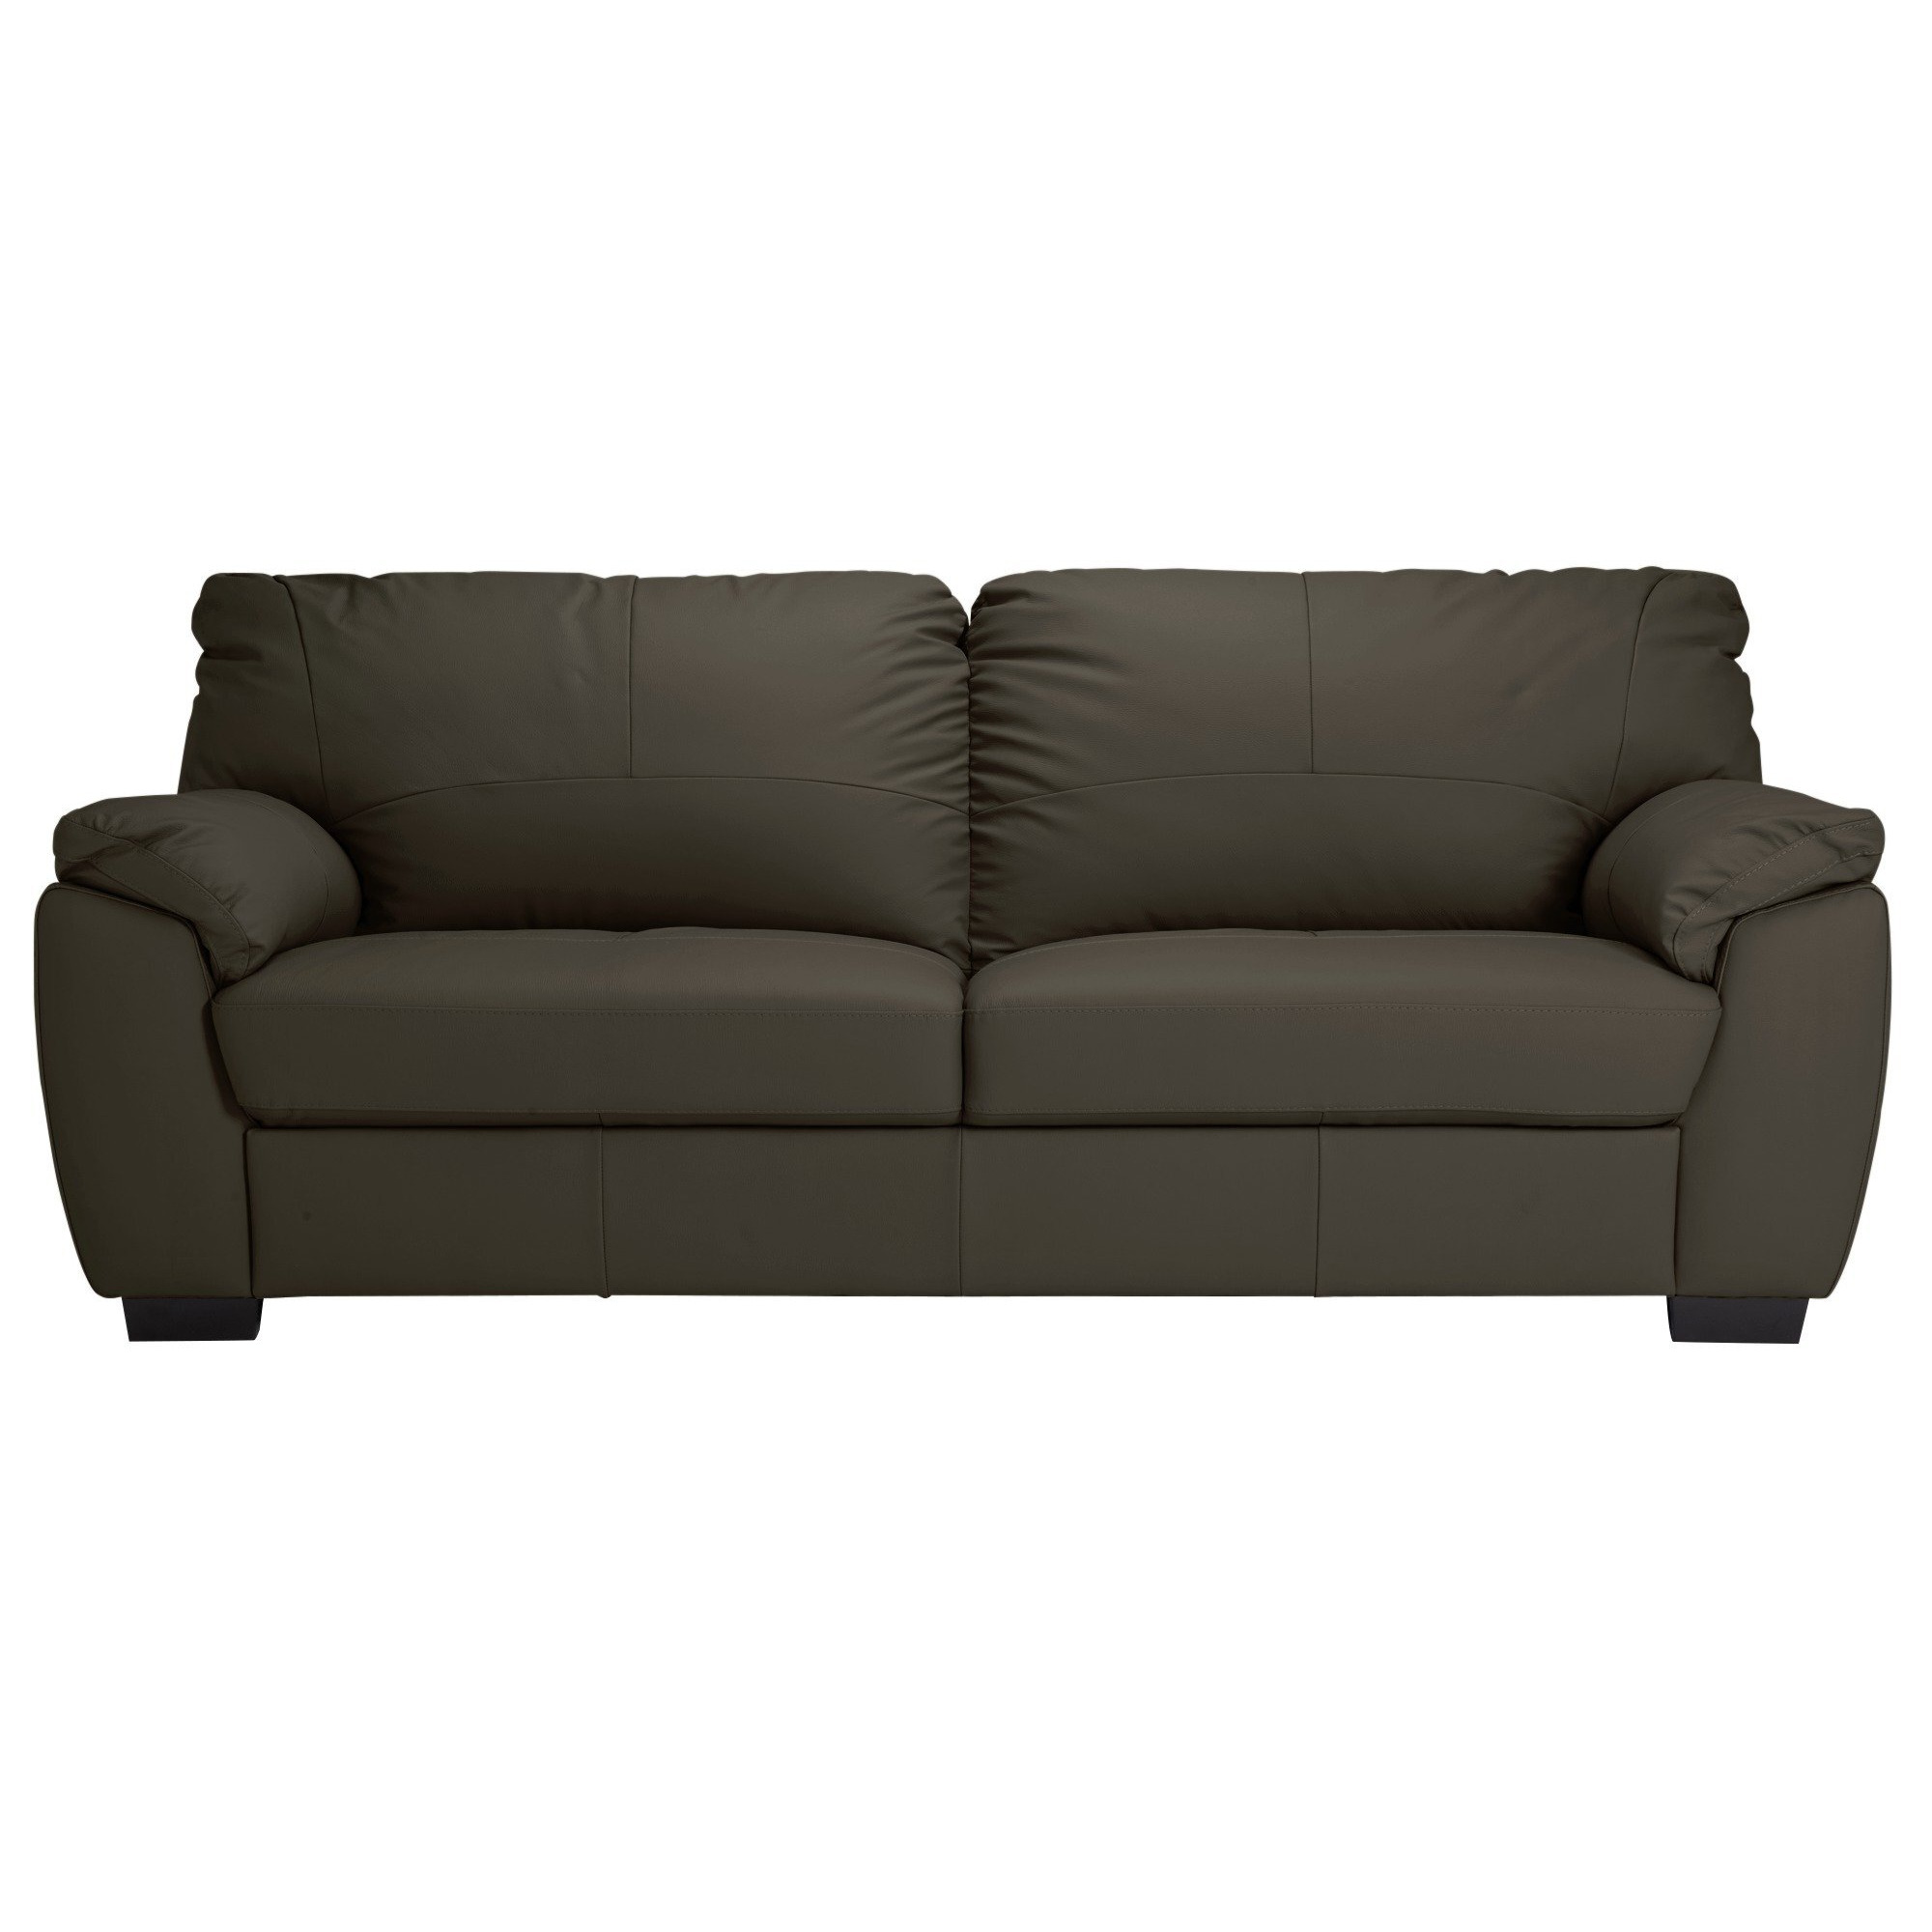 Argos Home Milano Leather 4 Seater Sofa - Chocolate - image 1